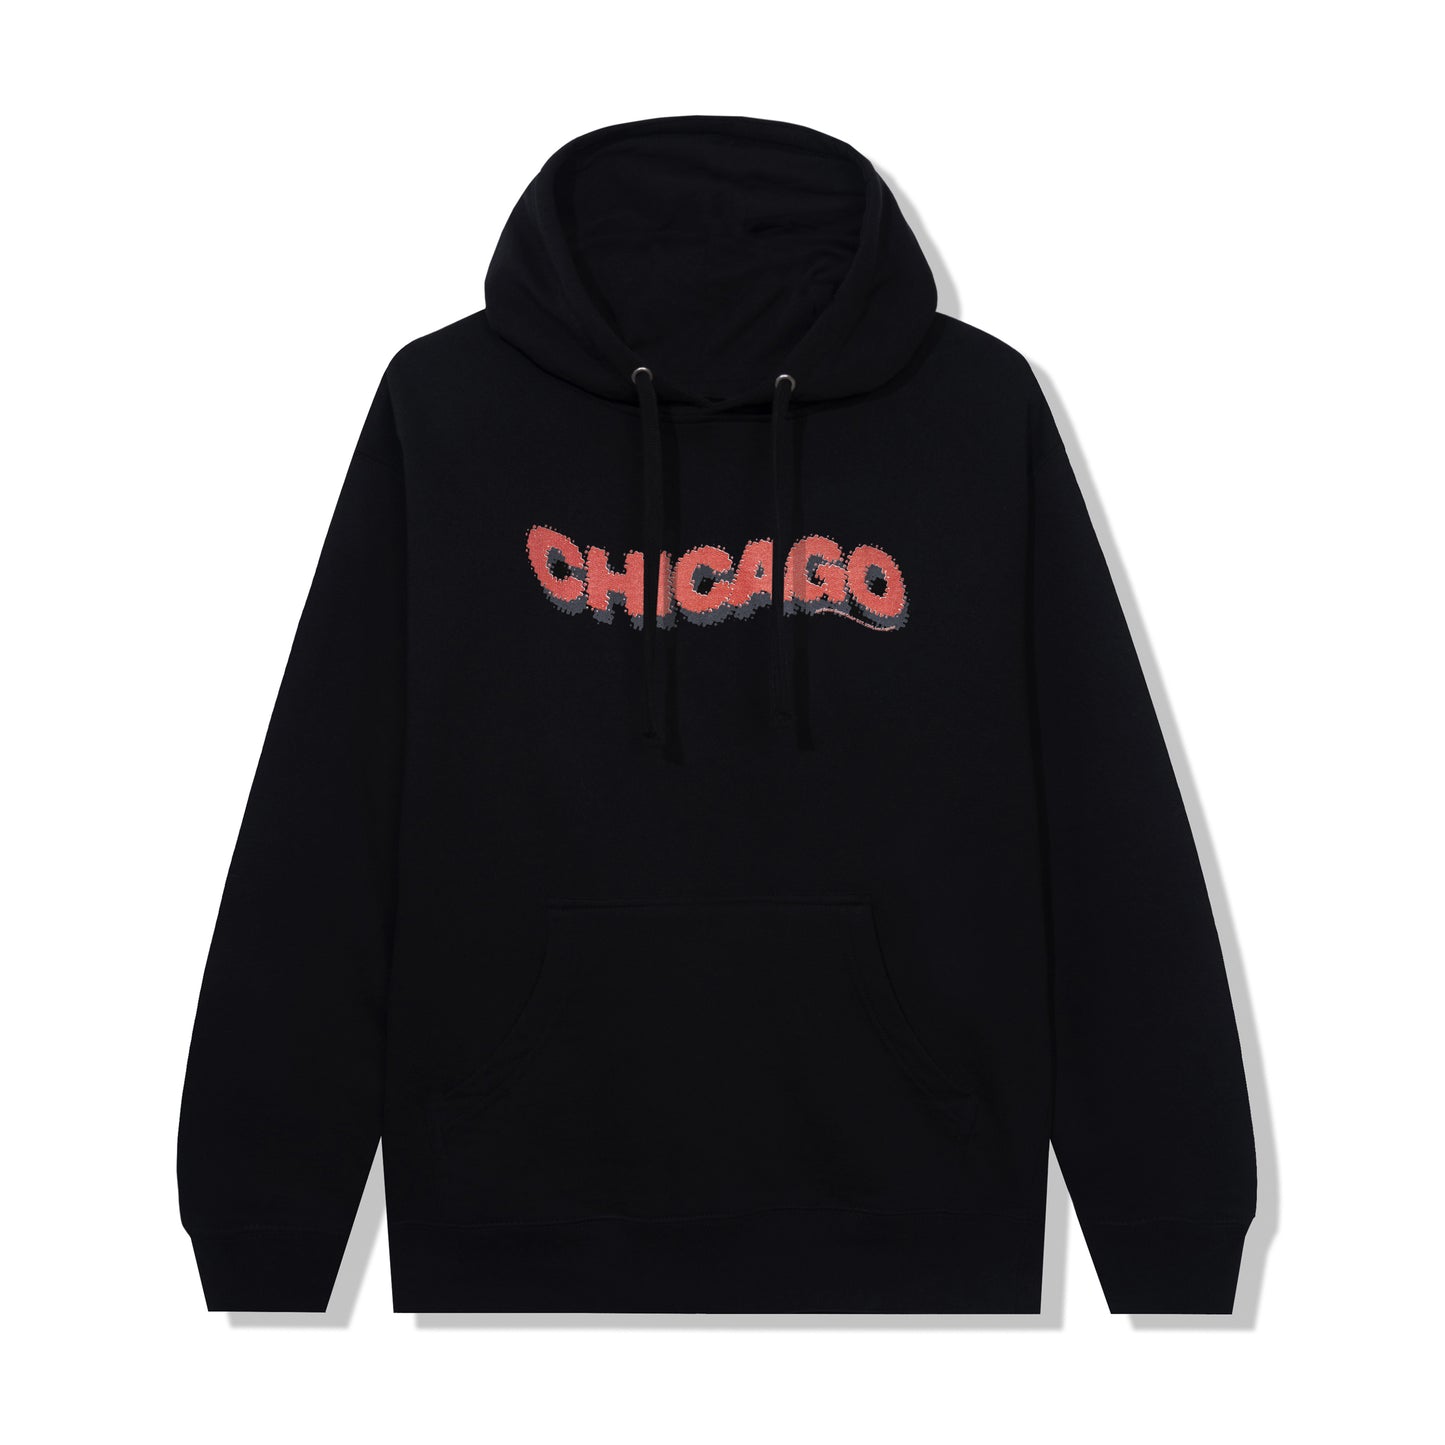 Chicago Black Hoodie